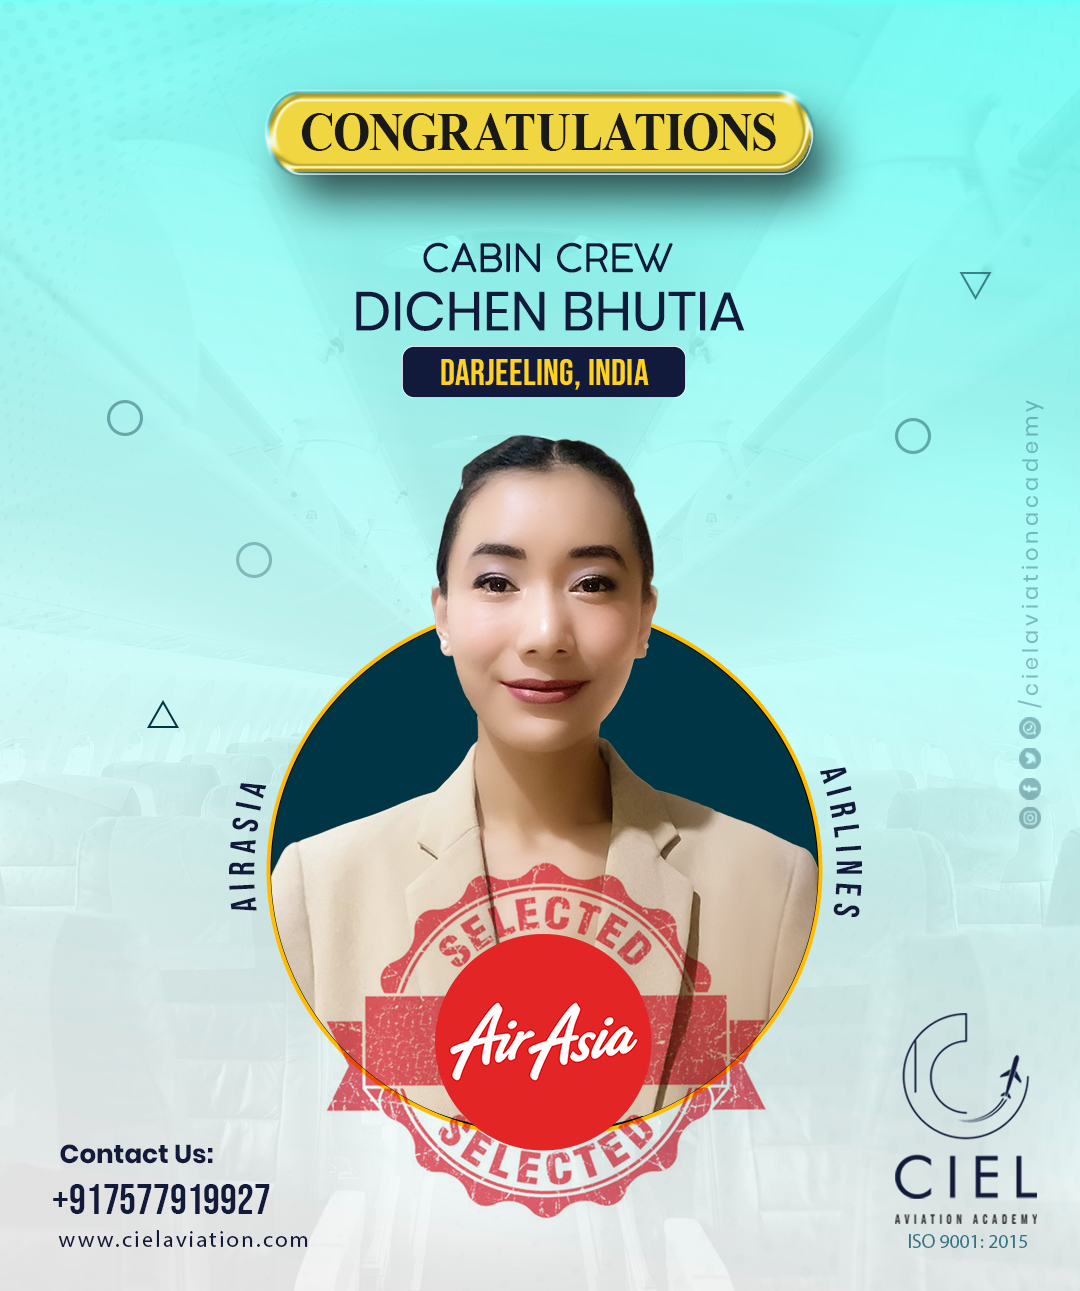 Ciel Aviation Academy - Dichen Bhutia